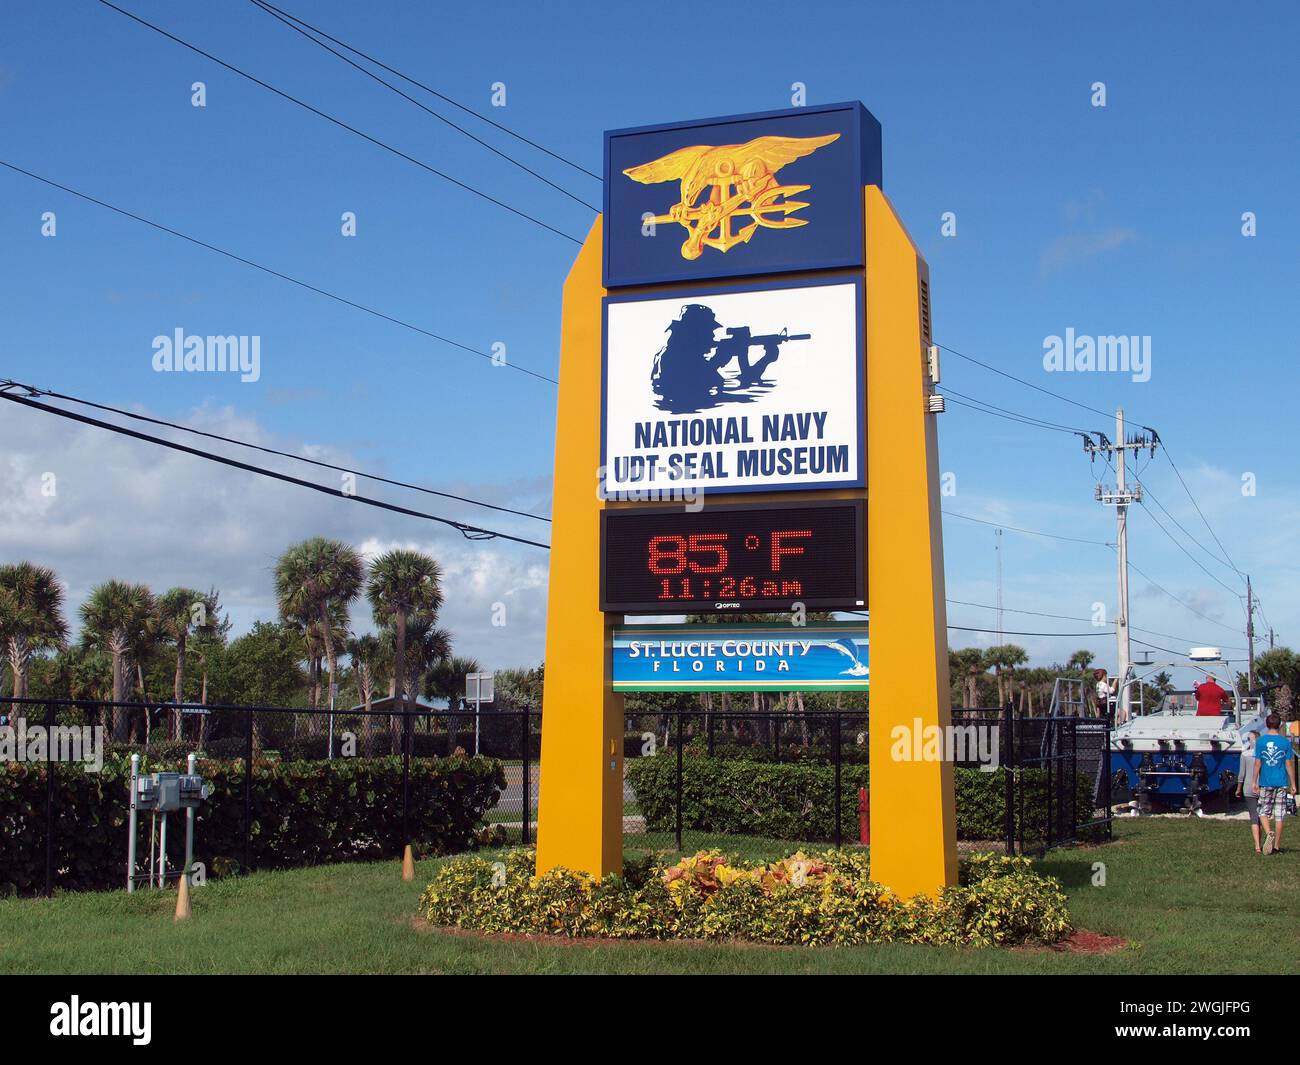 Ft. Pierce, Florida, USA - 29. Dezember 2015: Zeichen des National Navy UDT-SEAL Museum. Stockfoto